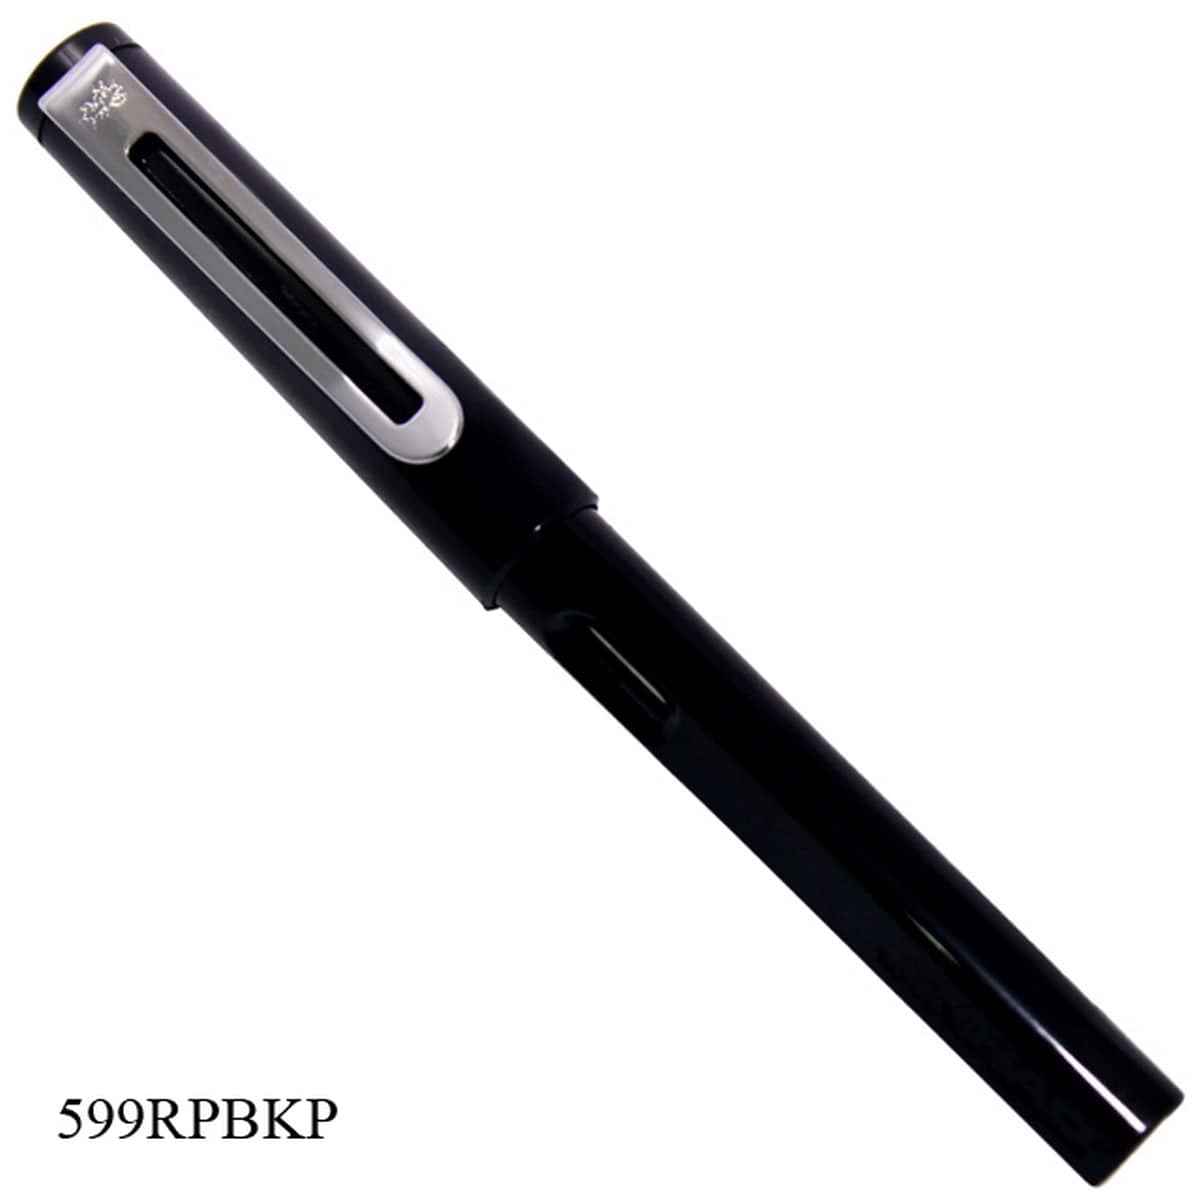 jags-mumbai Roller Pens Roller Pen Black Plastic 599RPBKP - Sleek and Stylish Writing Companion